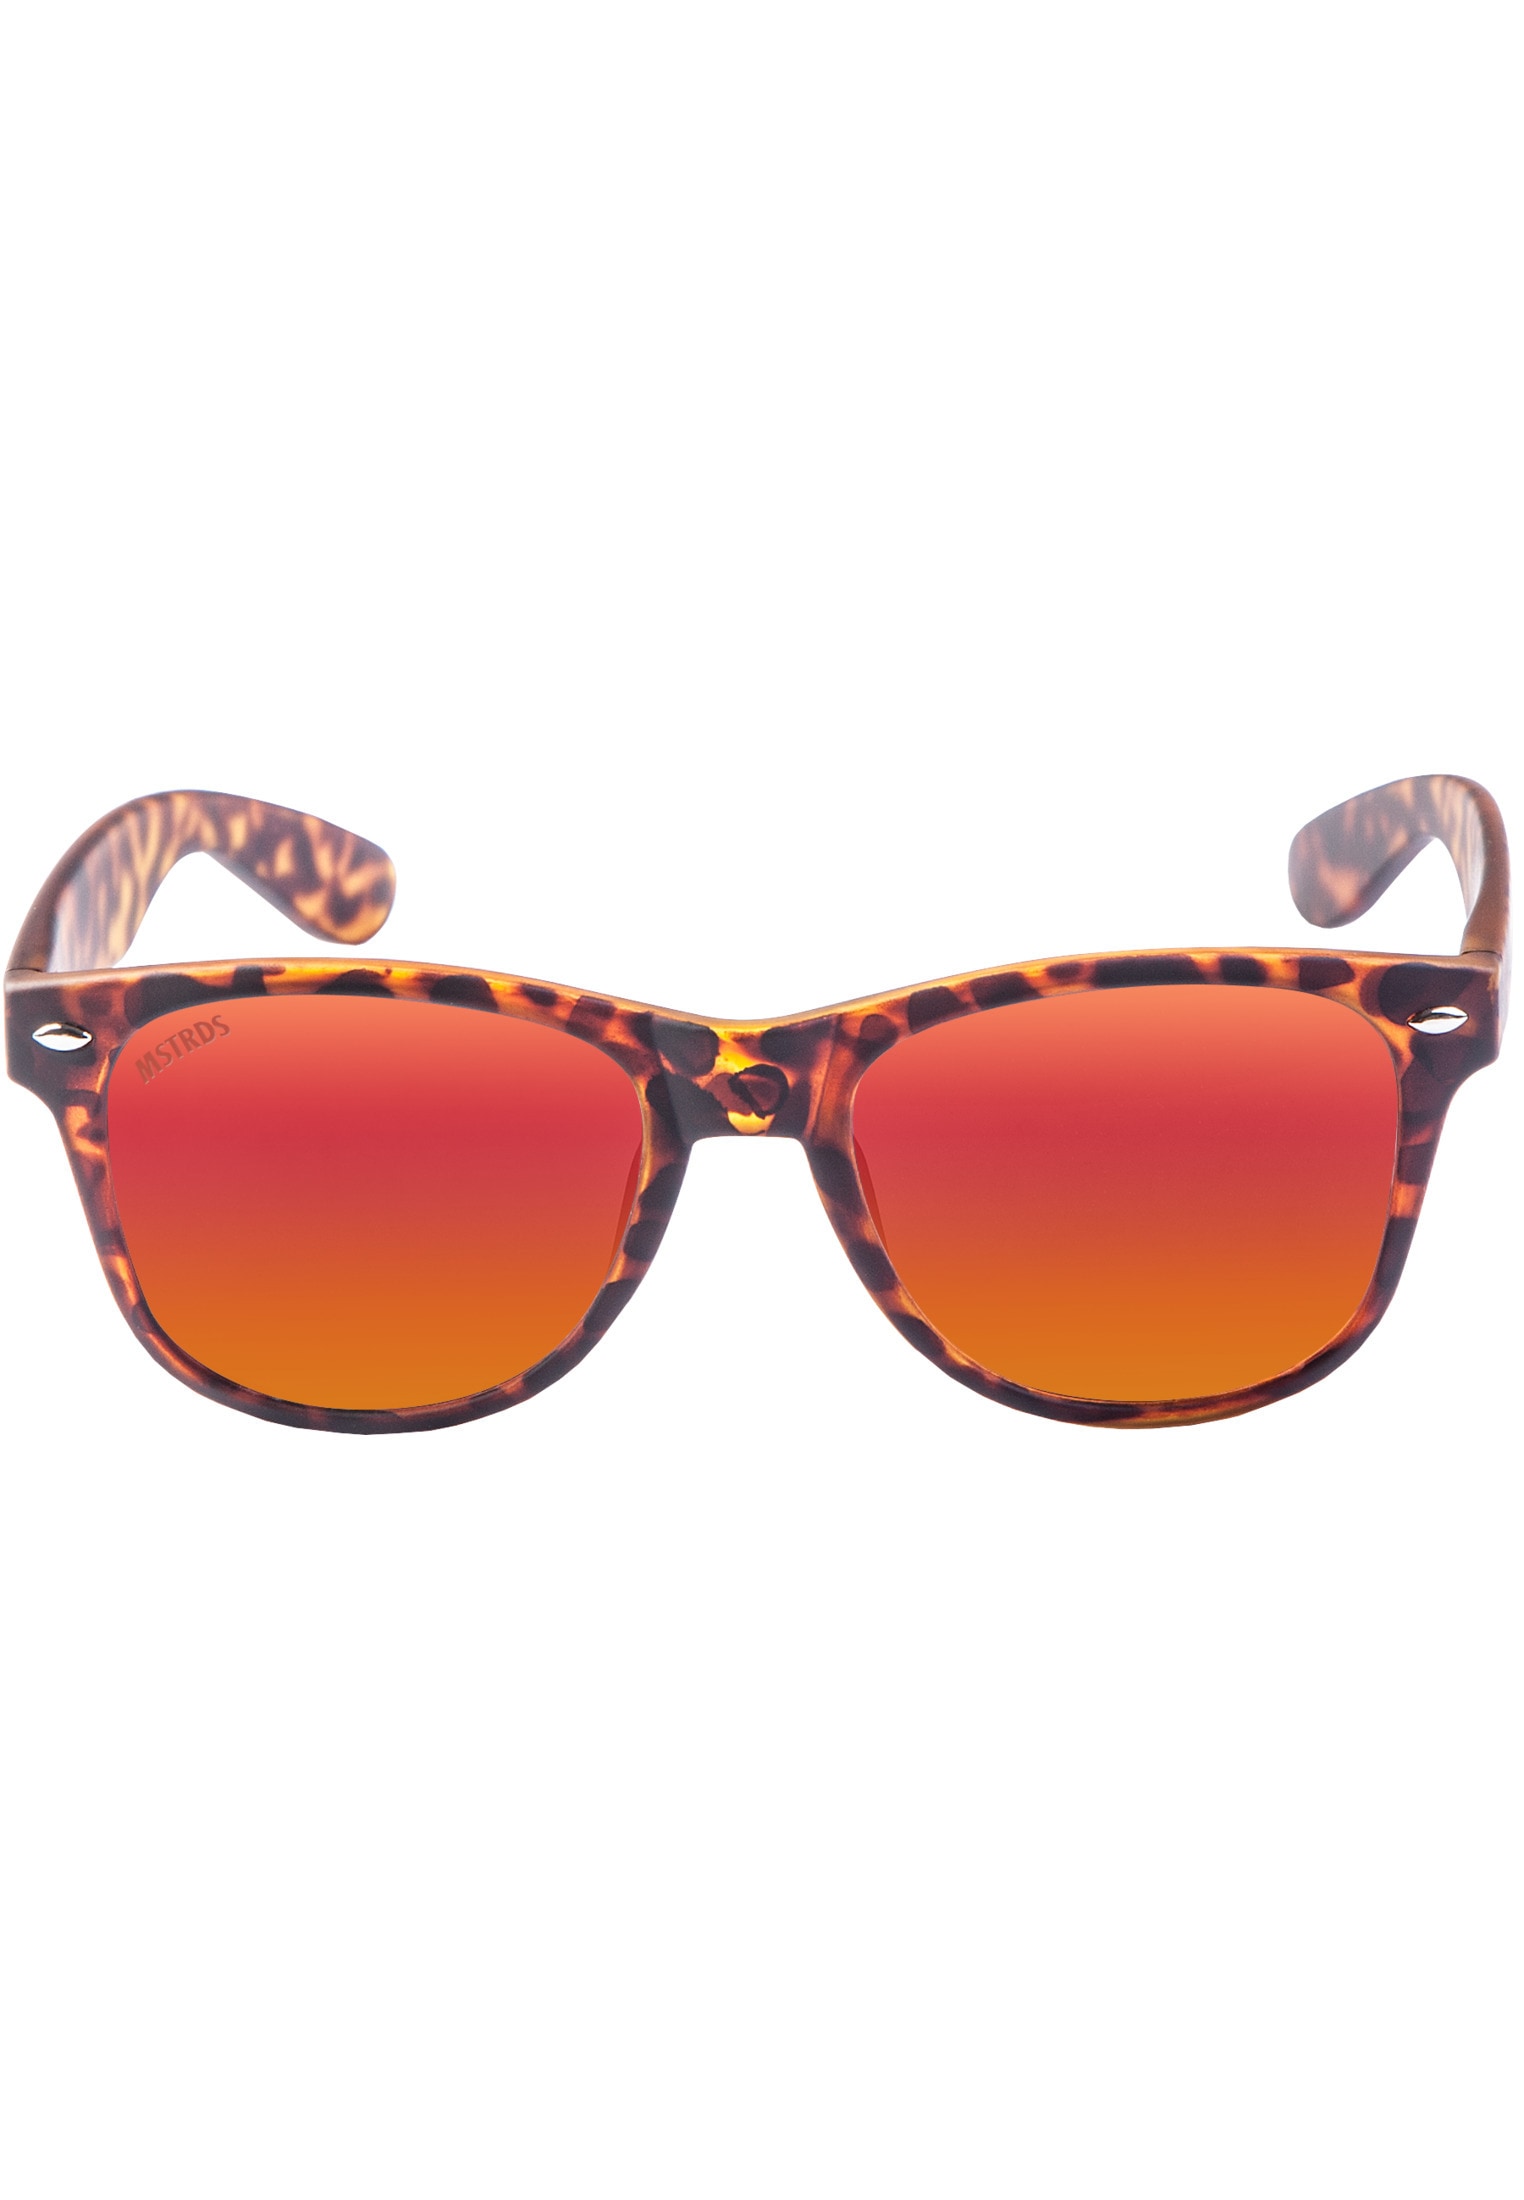 kaufen »Accessoires online I\'m walking | Likoma Sonnenbrille Sunglasses MSTRDS Youth«